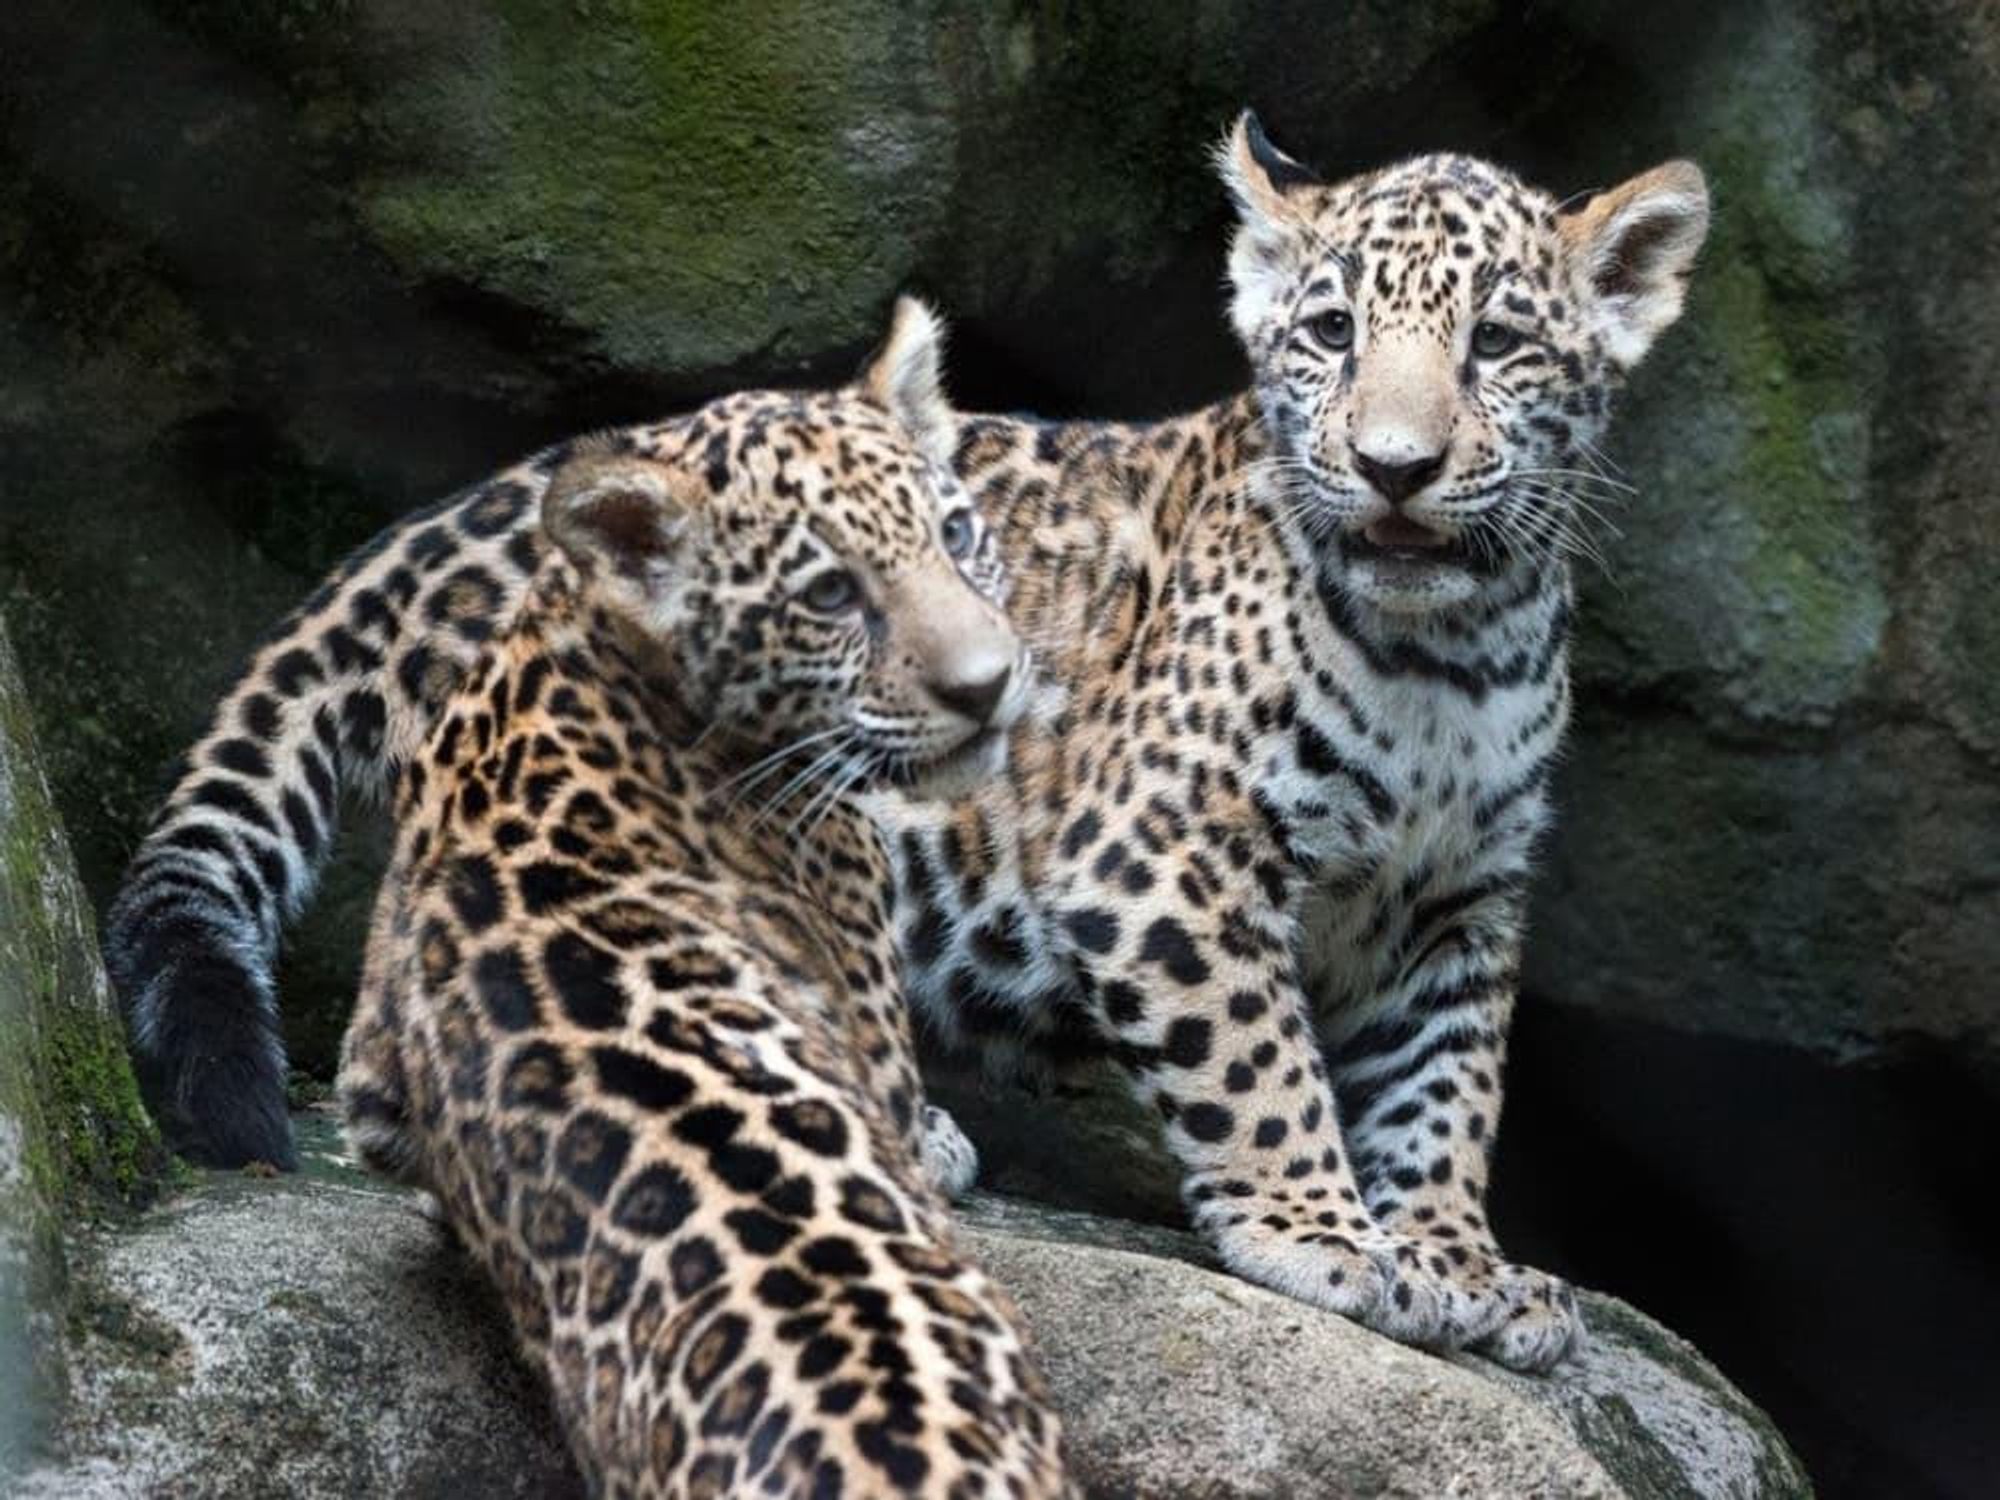 Jaguar cubs at Houston Zoo